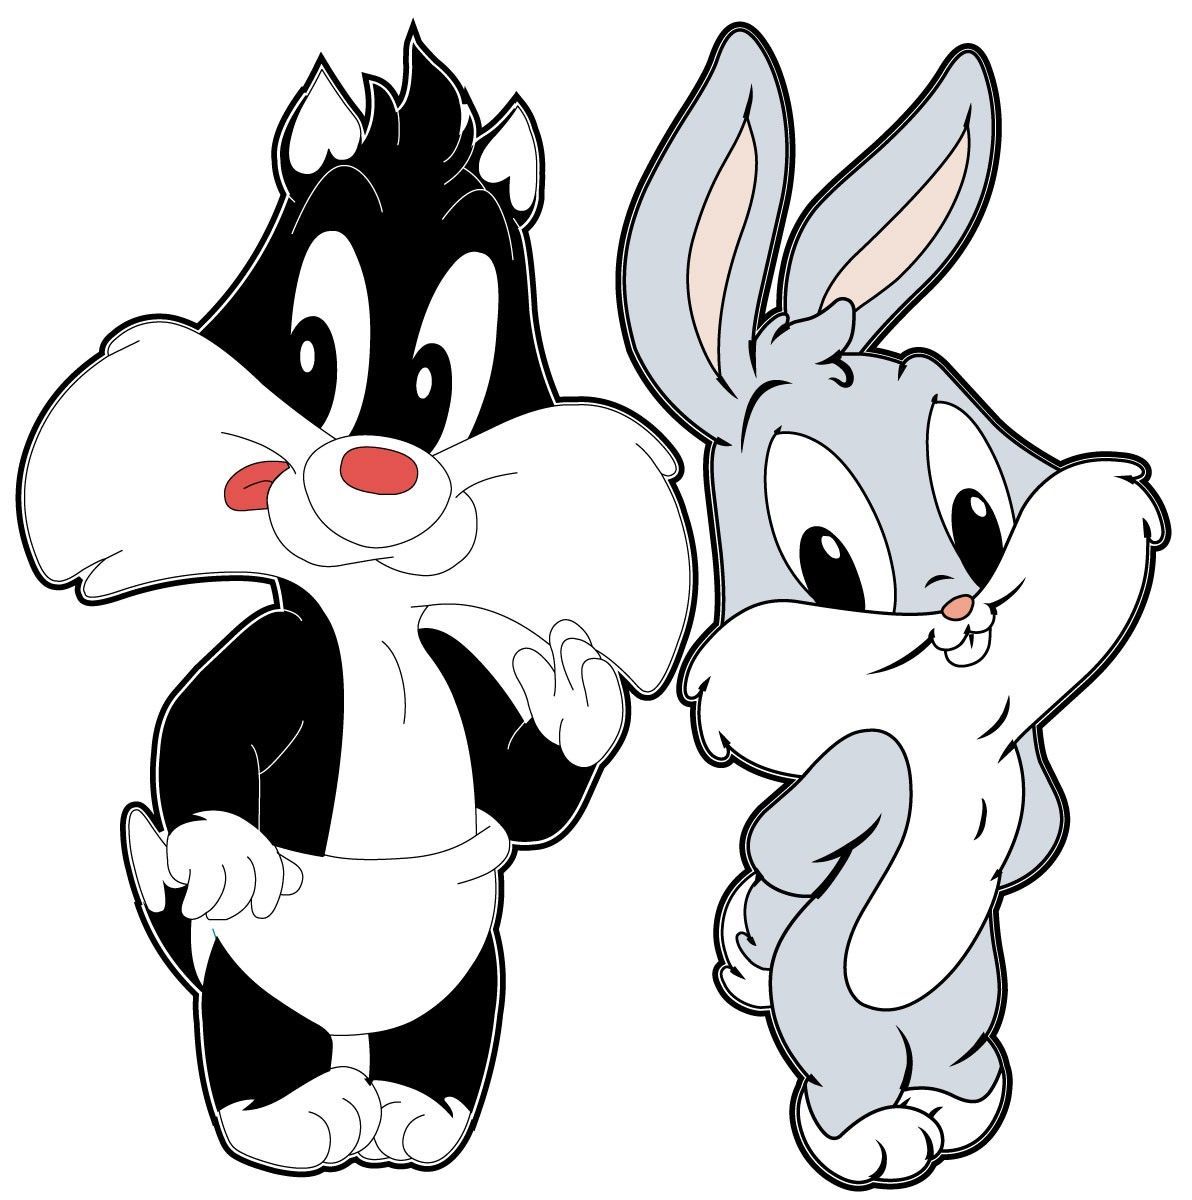 Sly and Bugs. Bugs bunny cartoons, Baby bugs bunny, Bunny wallpaper